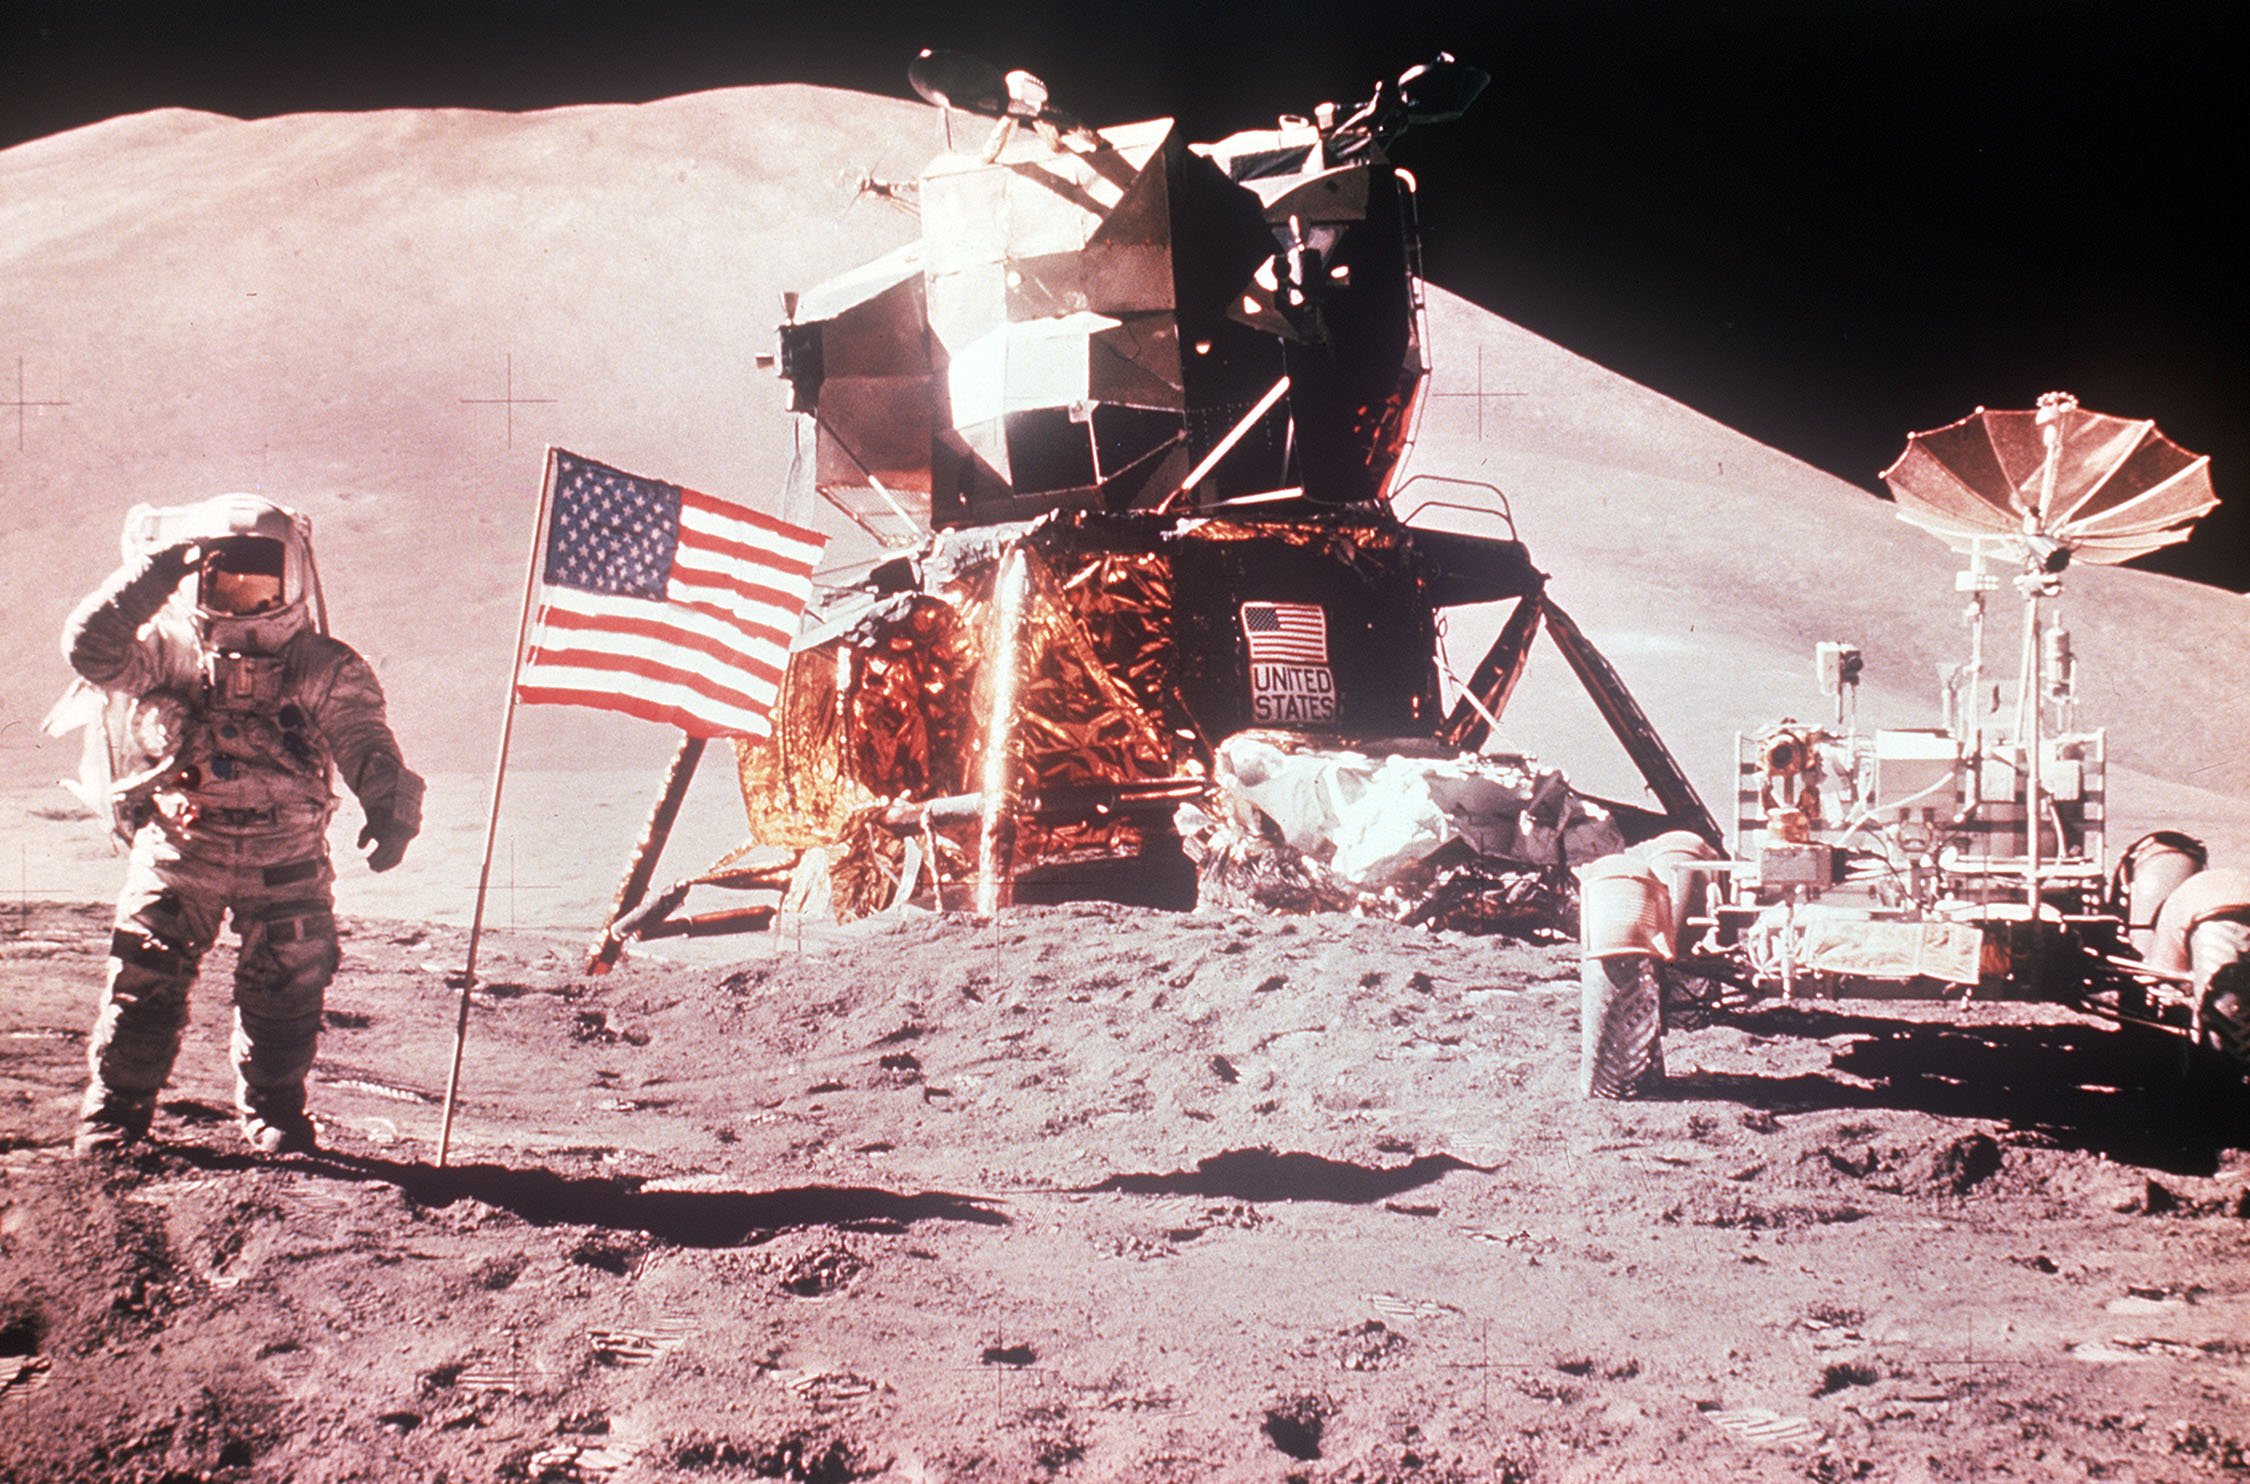 First land on the moon. Аполлон 11 1969. 1969 Первый человек на Луне. Аполлон 11 высадка на луну.